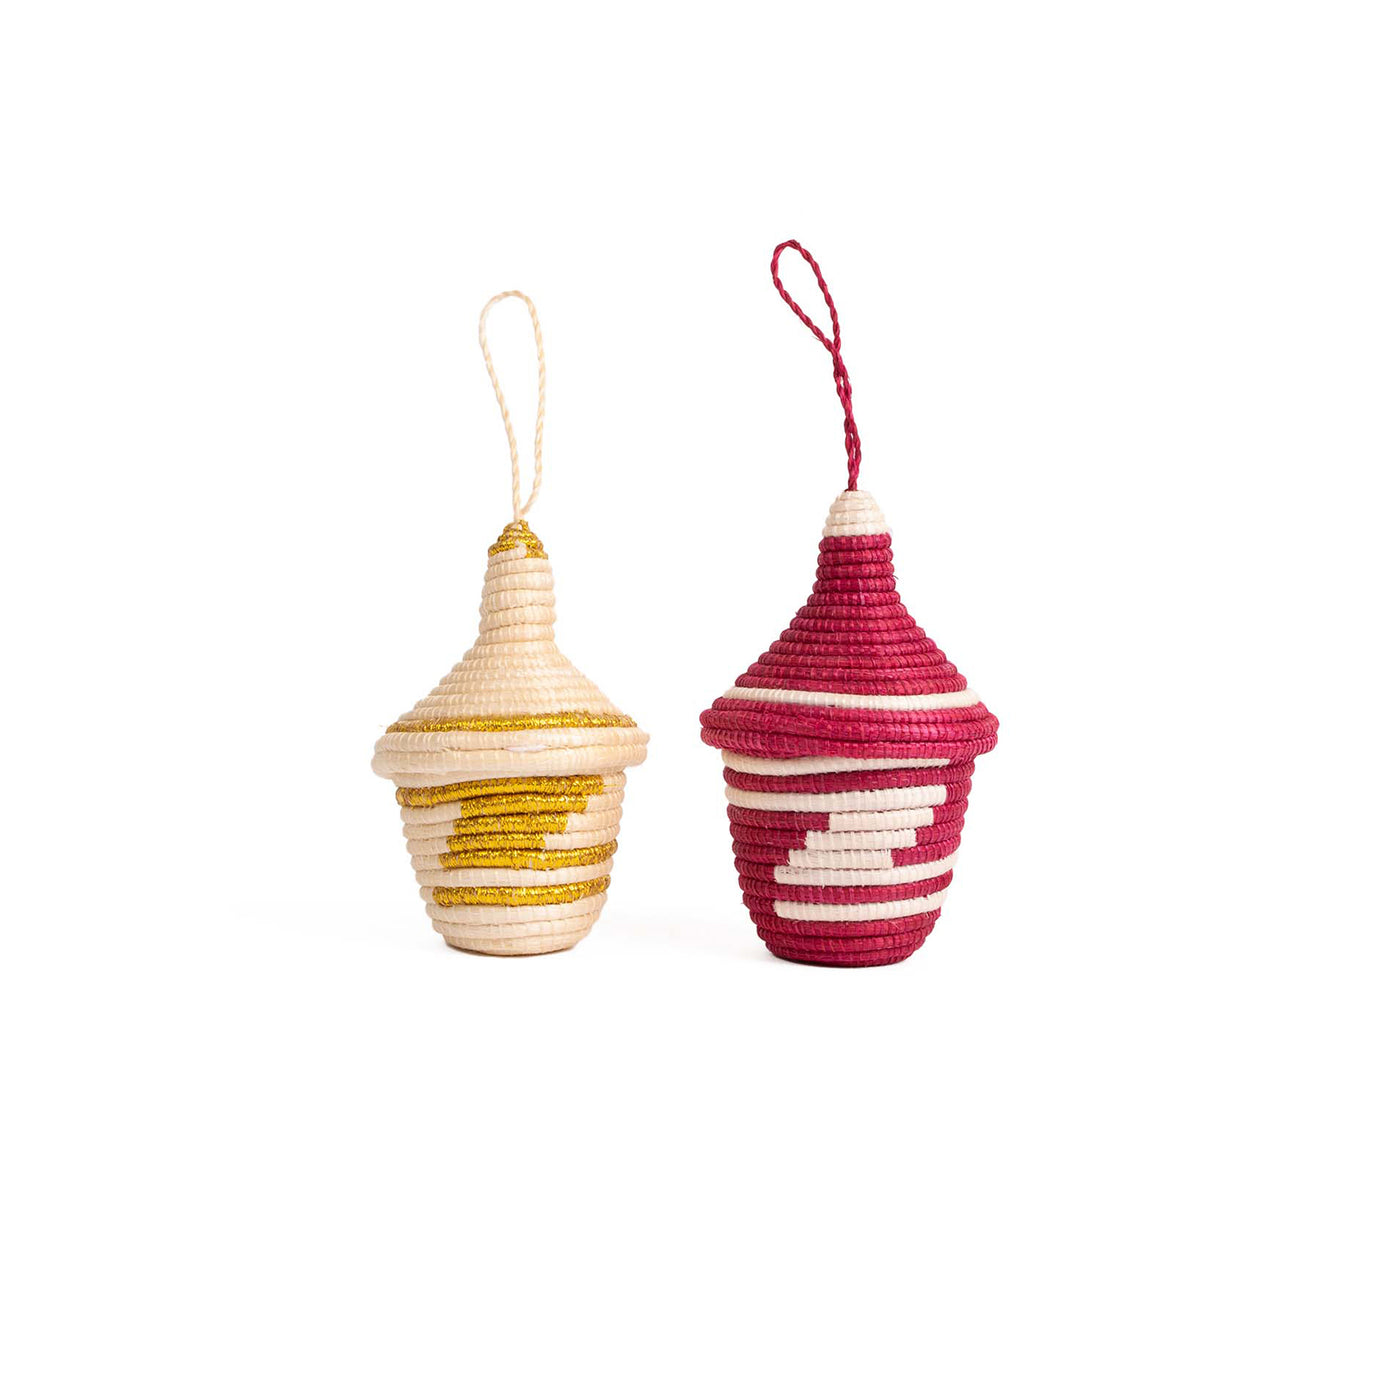 Red & Gold Mini Lidded Ornaments, Set of 2